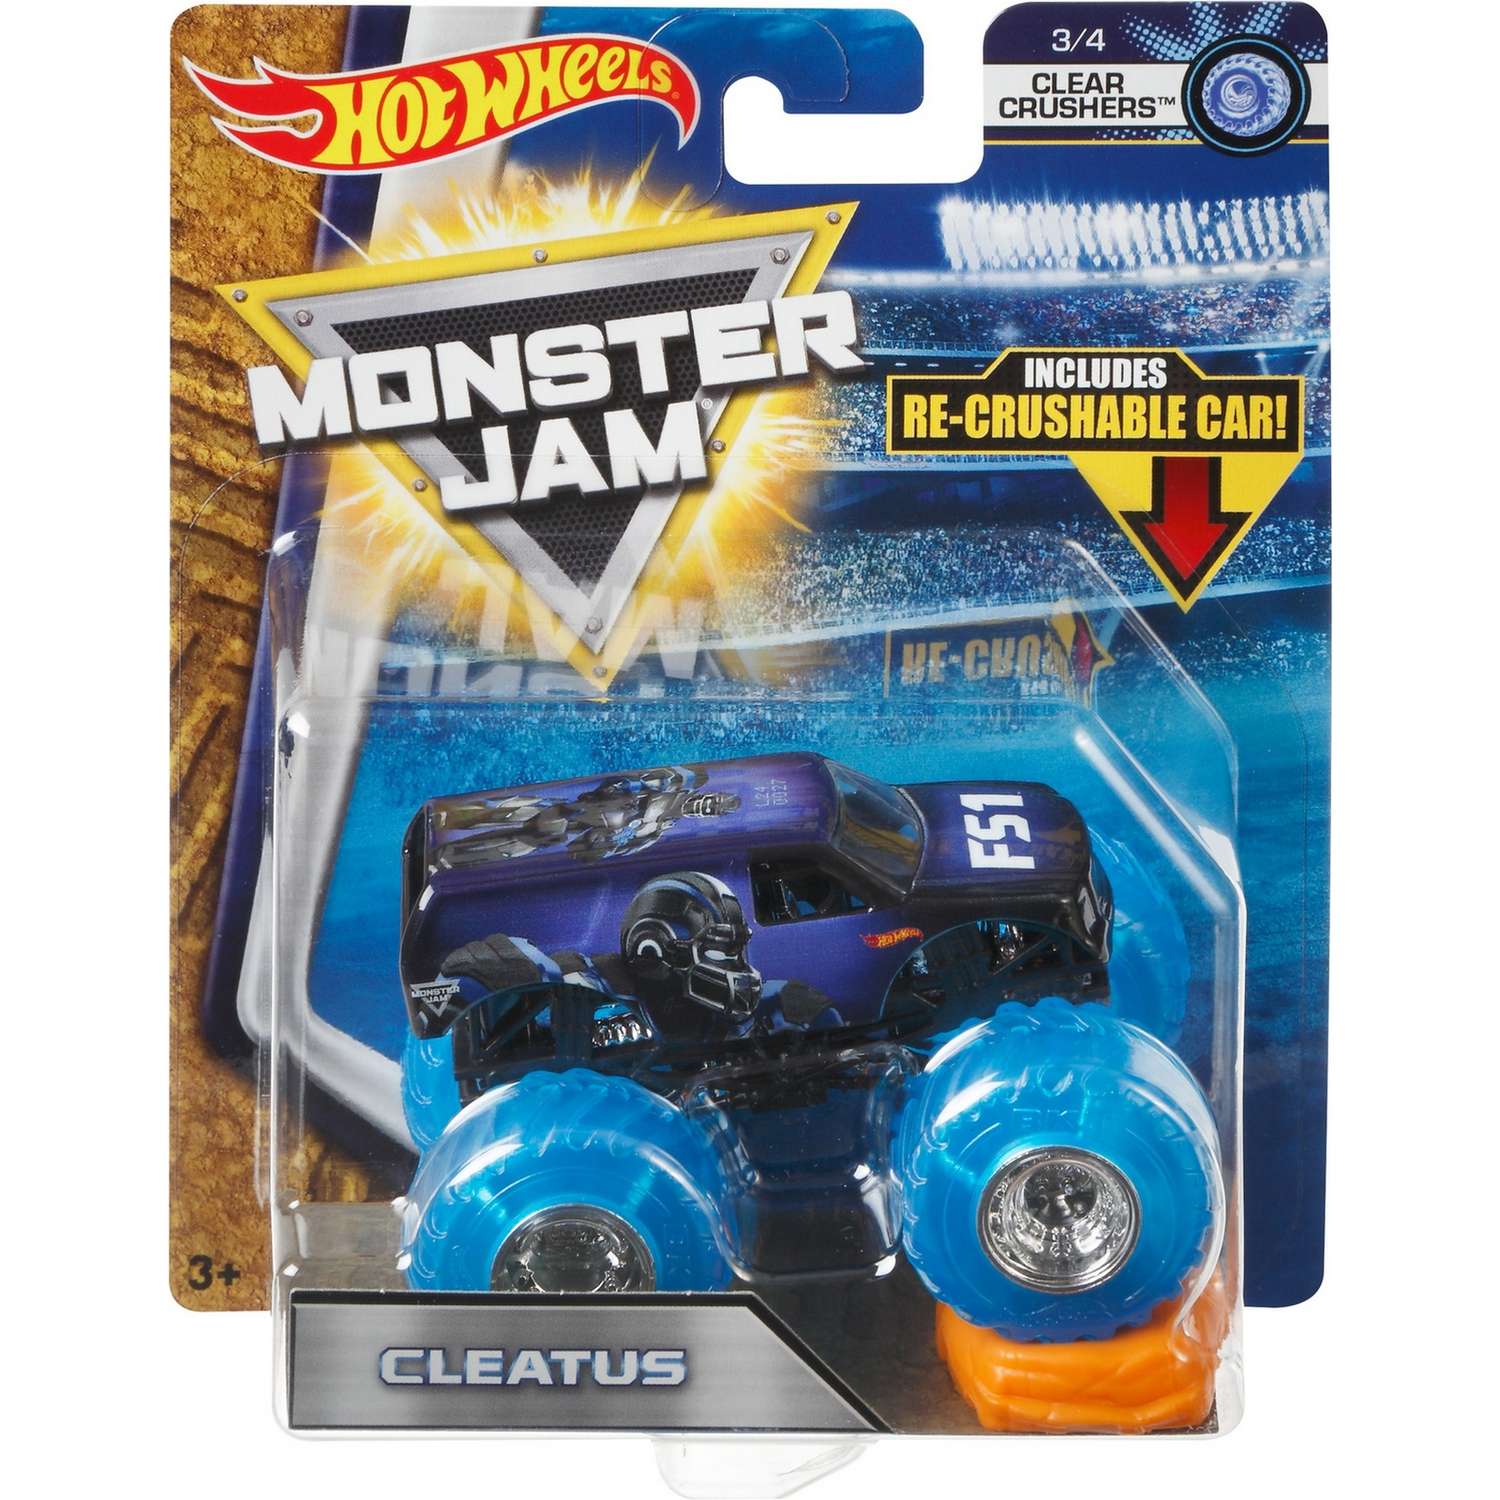 Машина Hot Wheels Monster Jam 1:64 Clear Cruschers Клетус FLX18 21572 - фото 2